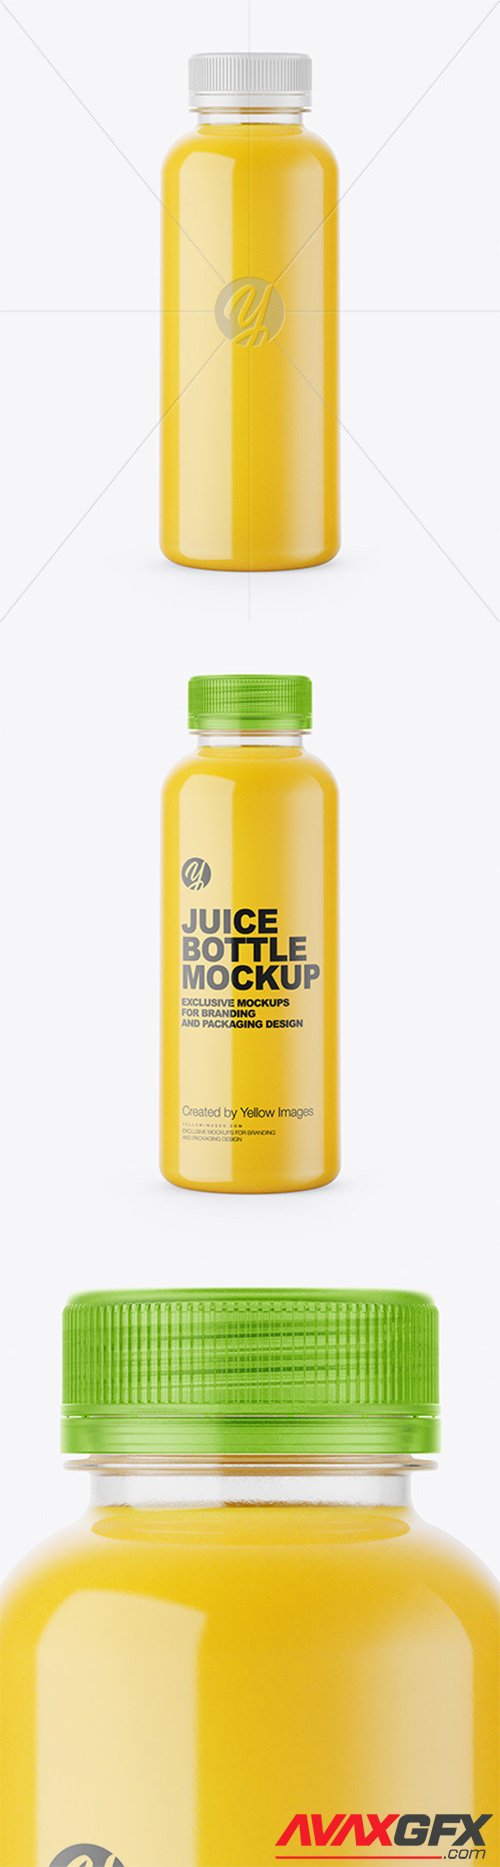 Clear Bottle with Orange Juice Mockup 82132